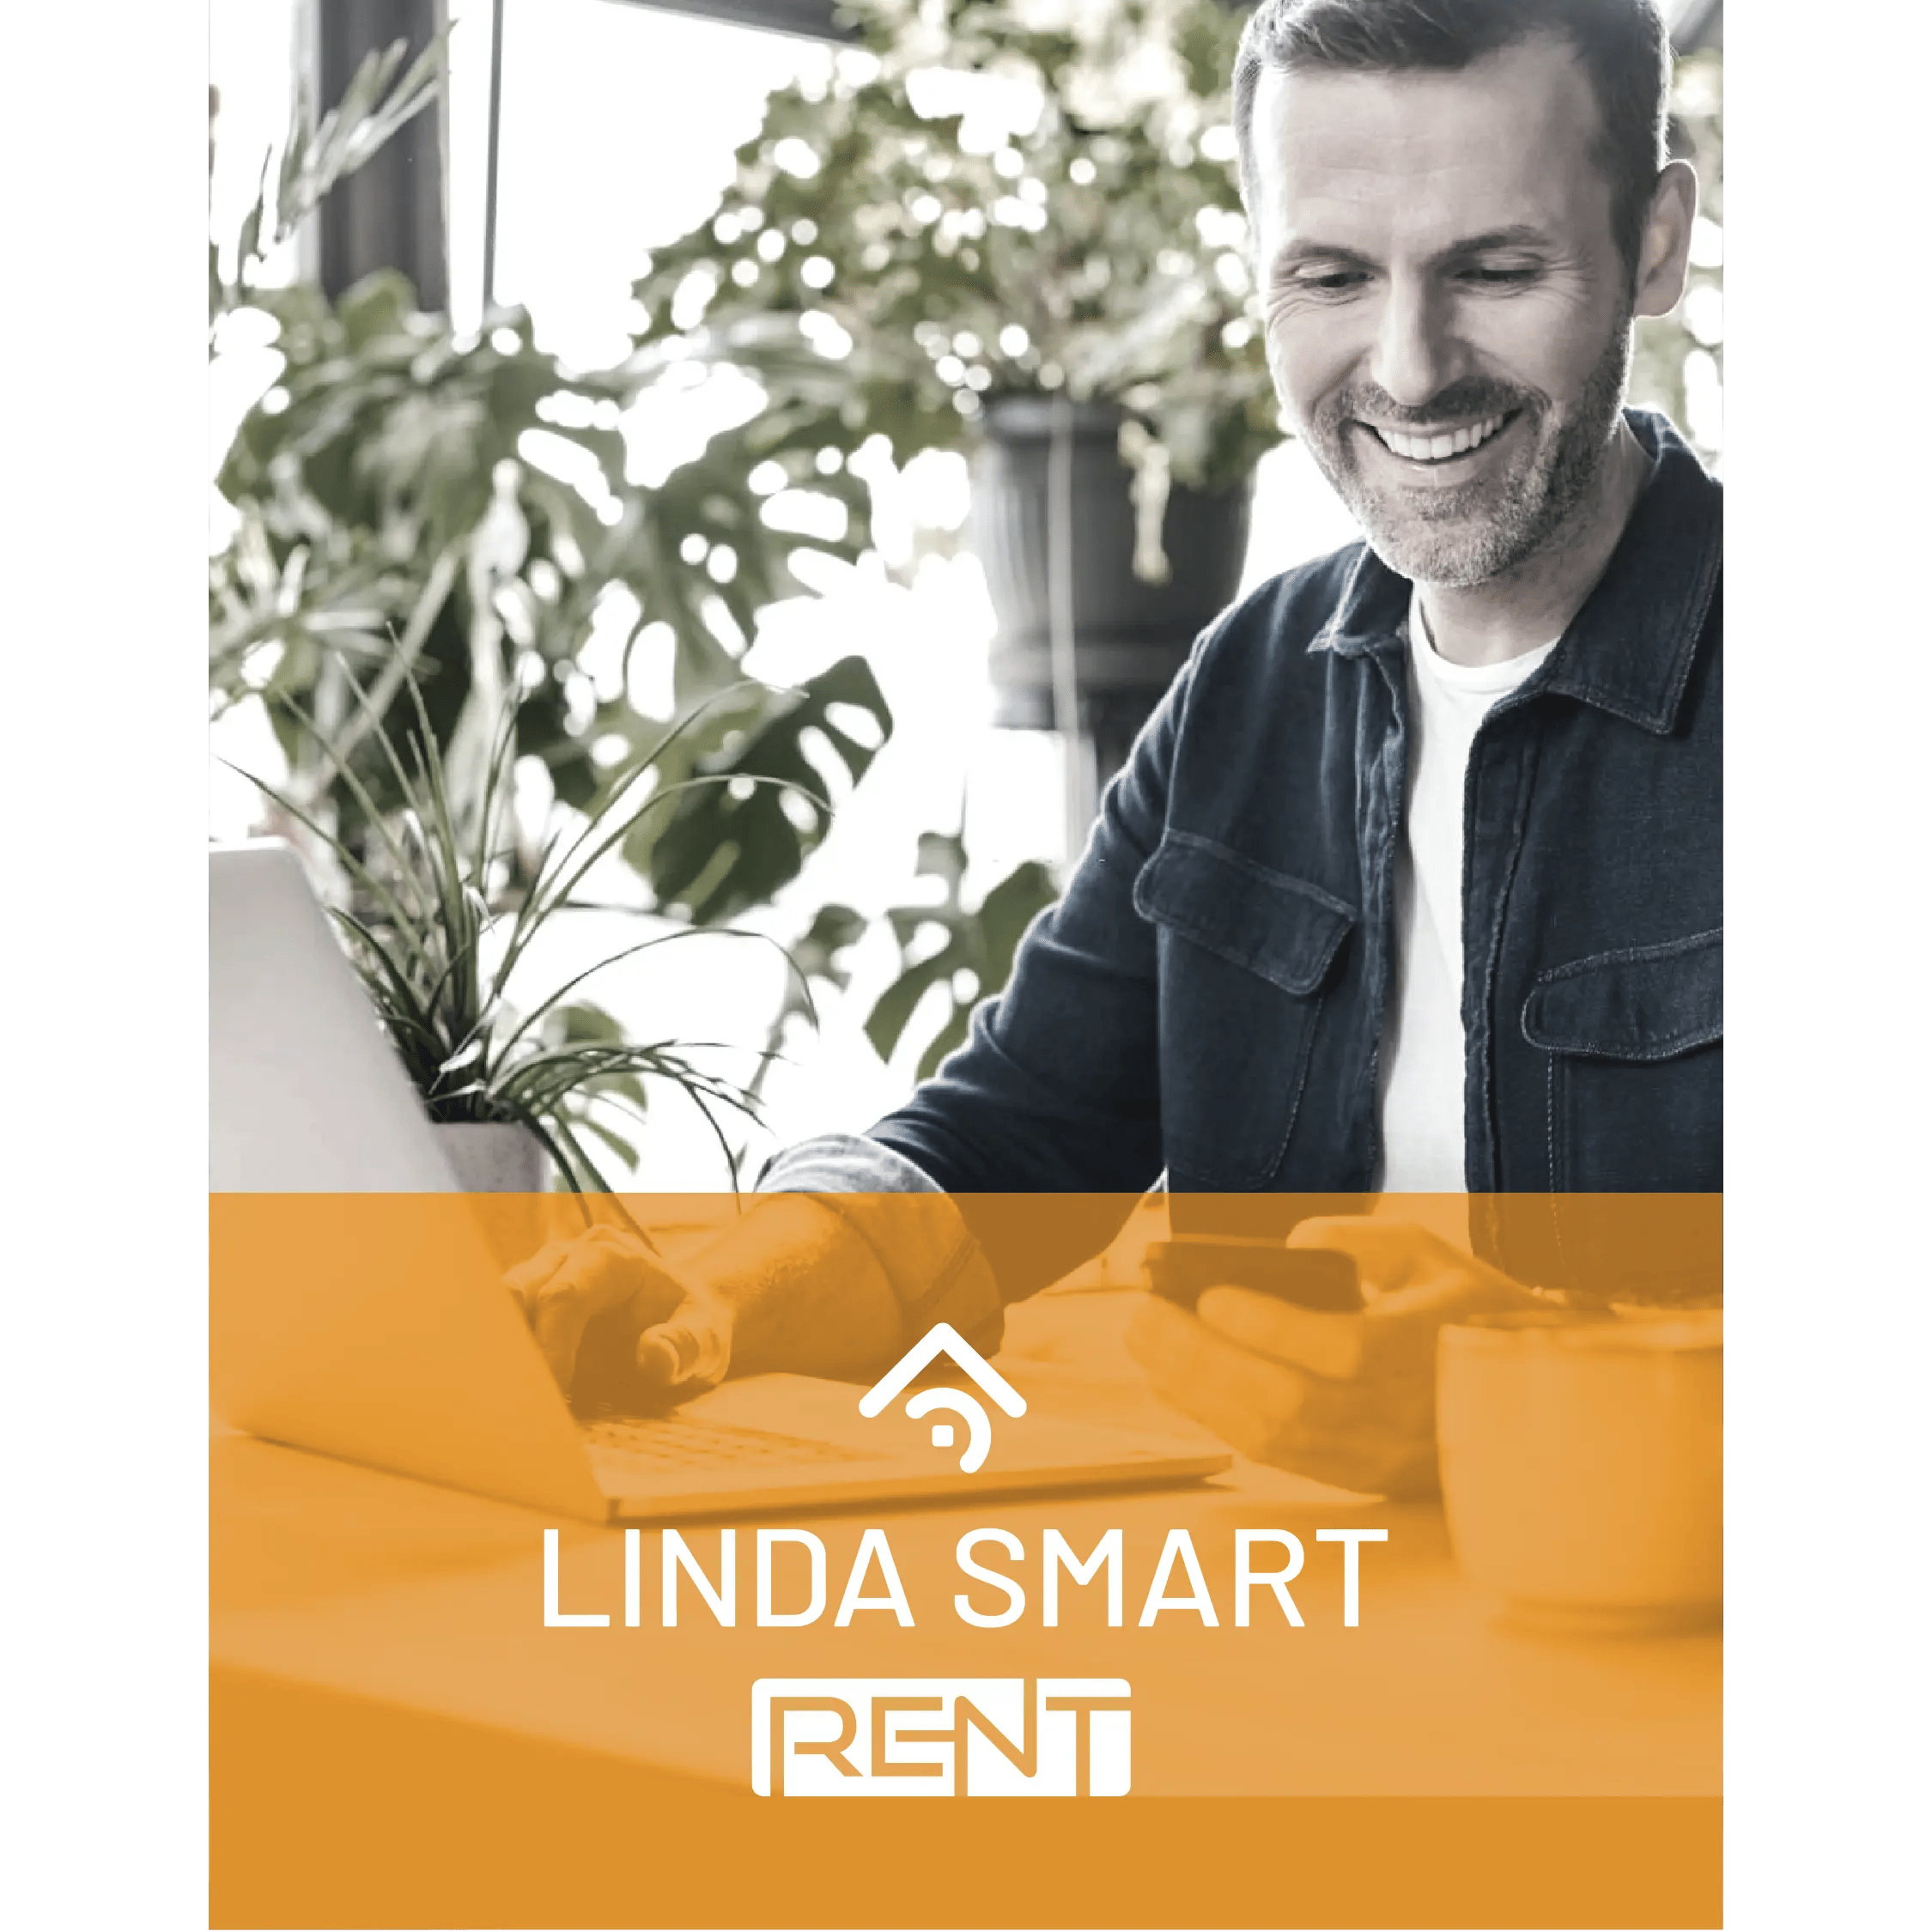 Linda Smart Rent